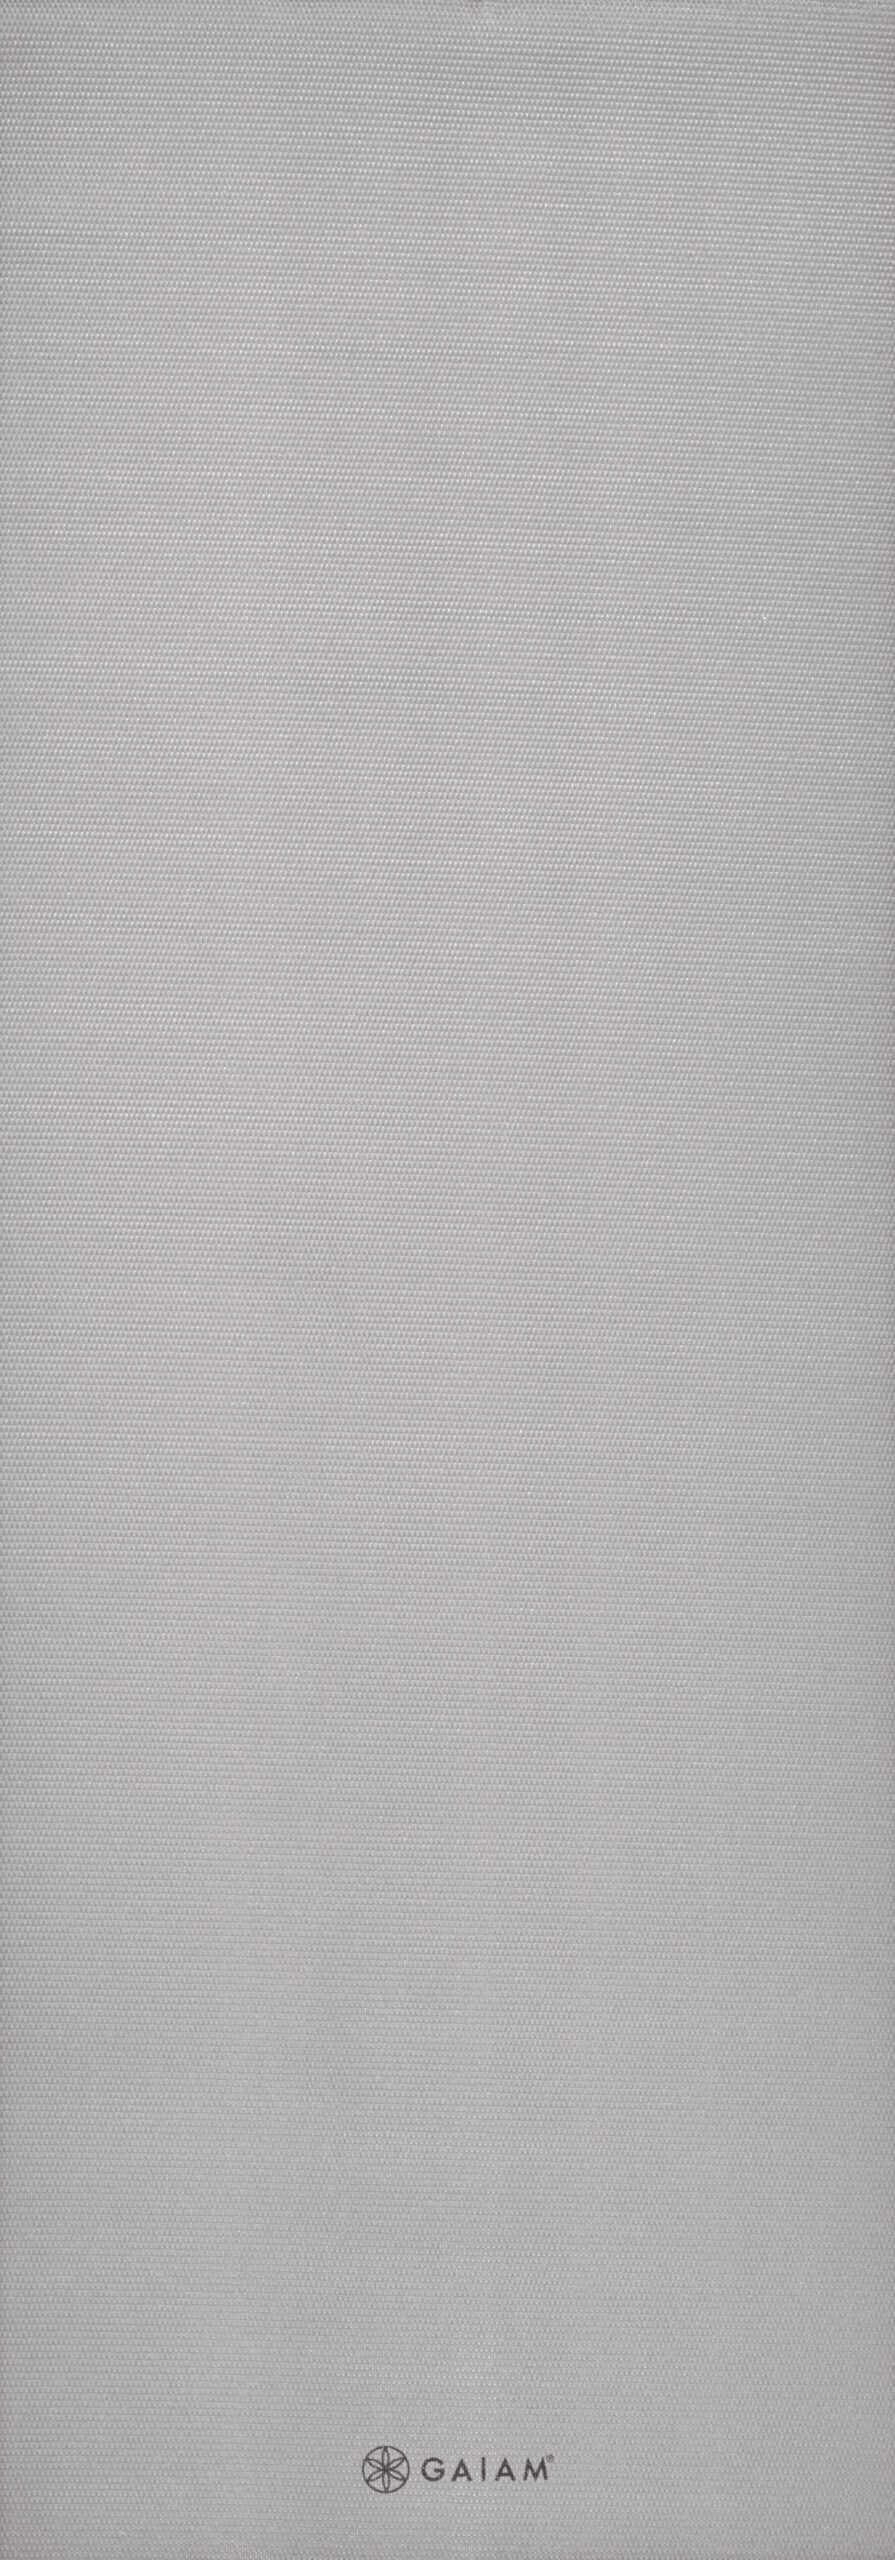 Gaiam Yoga Mat - Sustained Grey - 5 mm